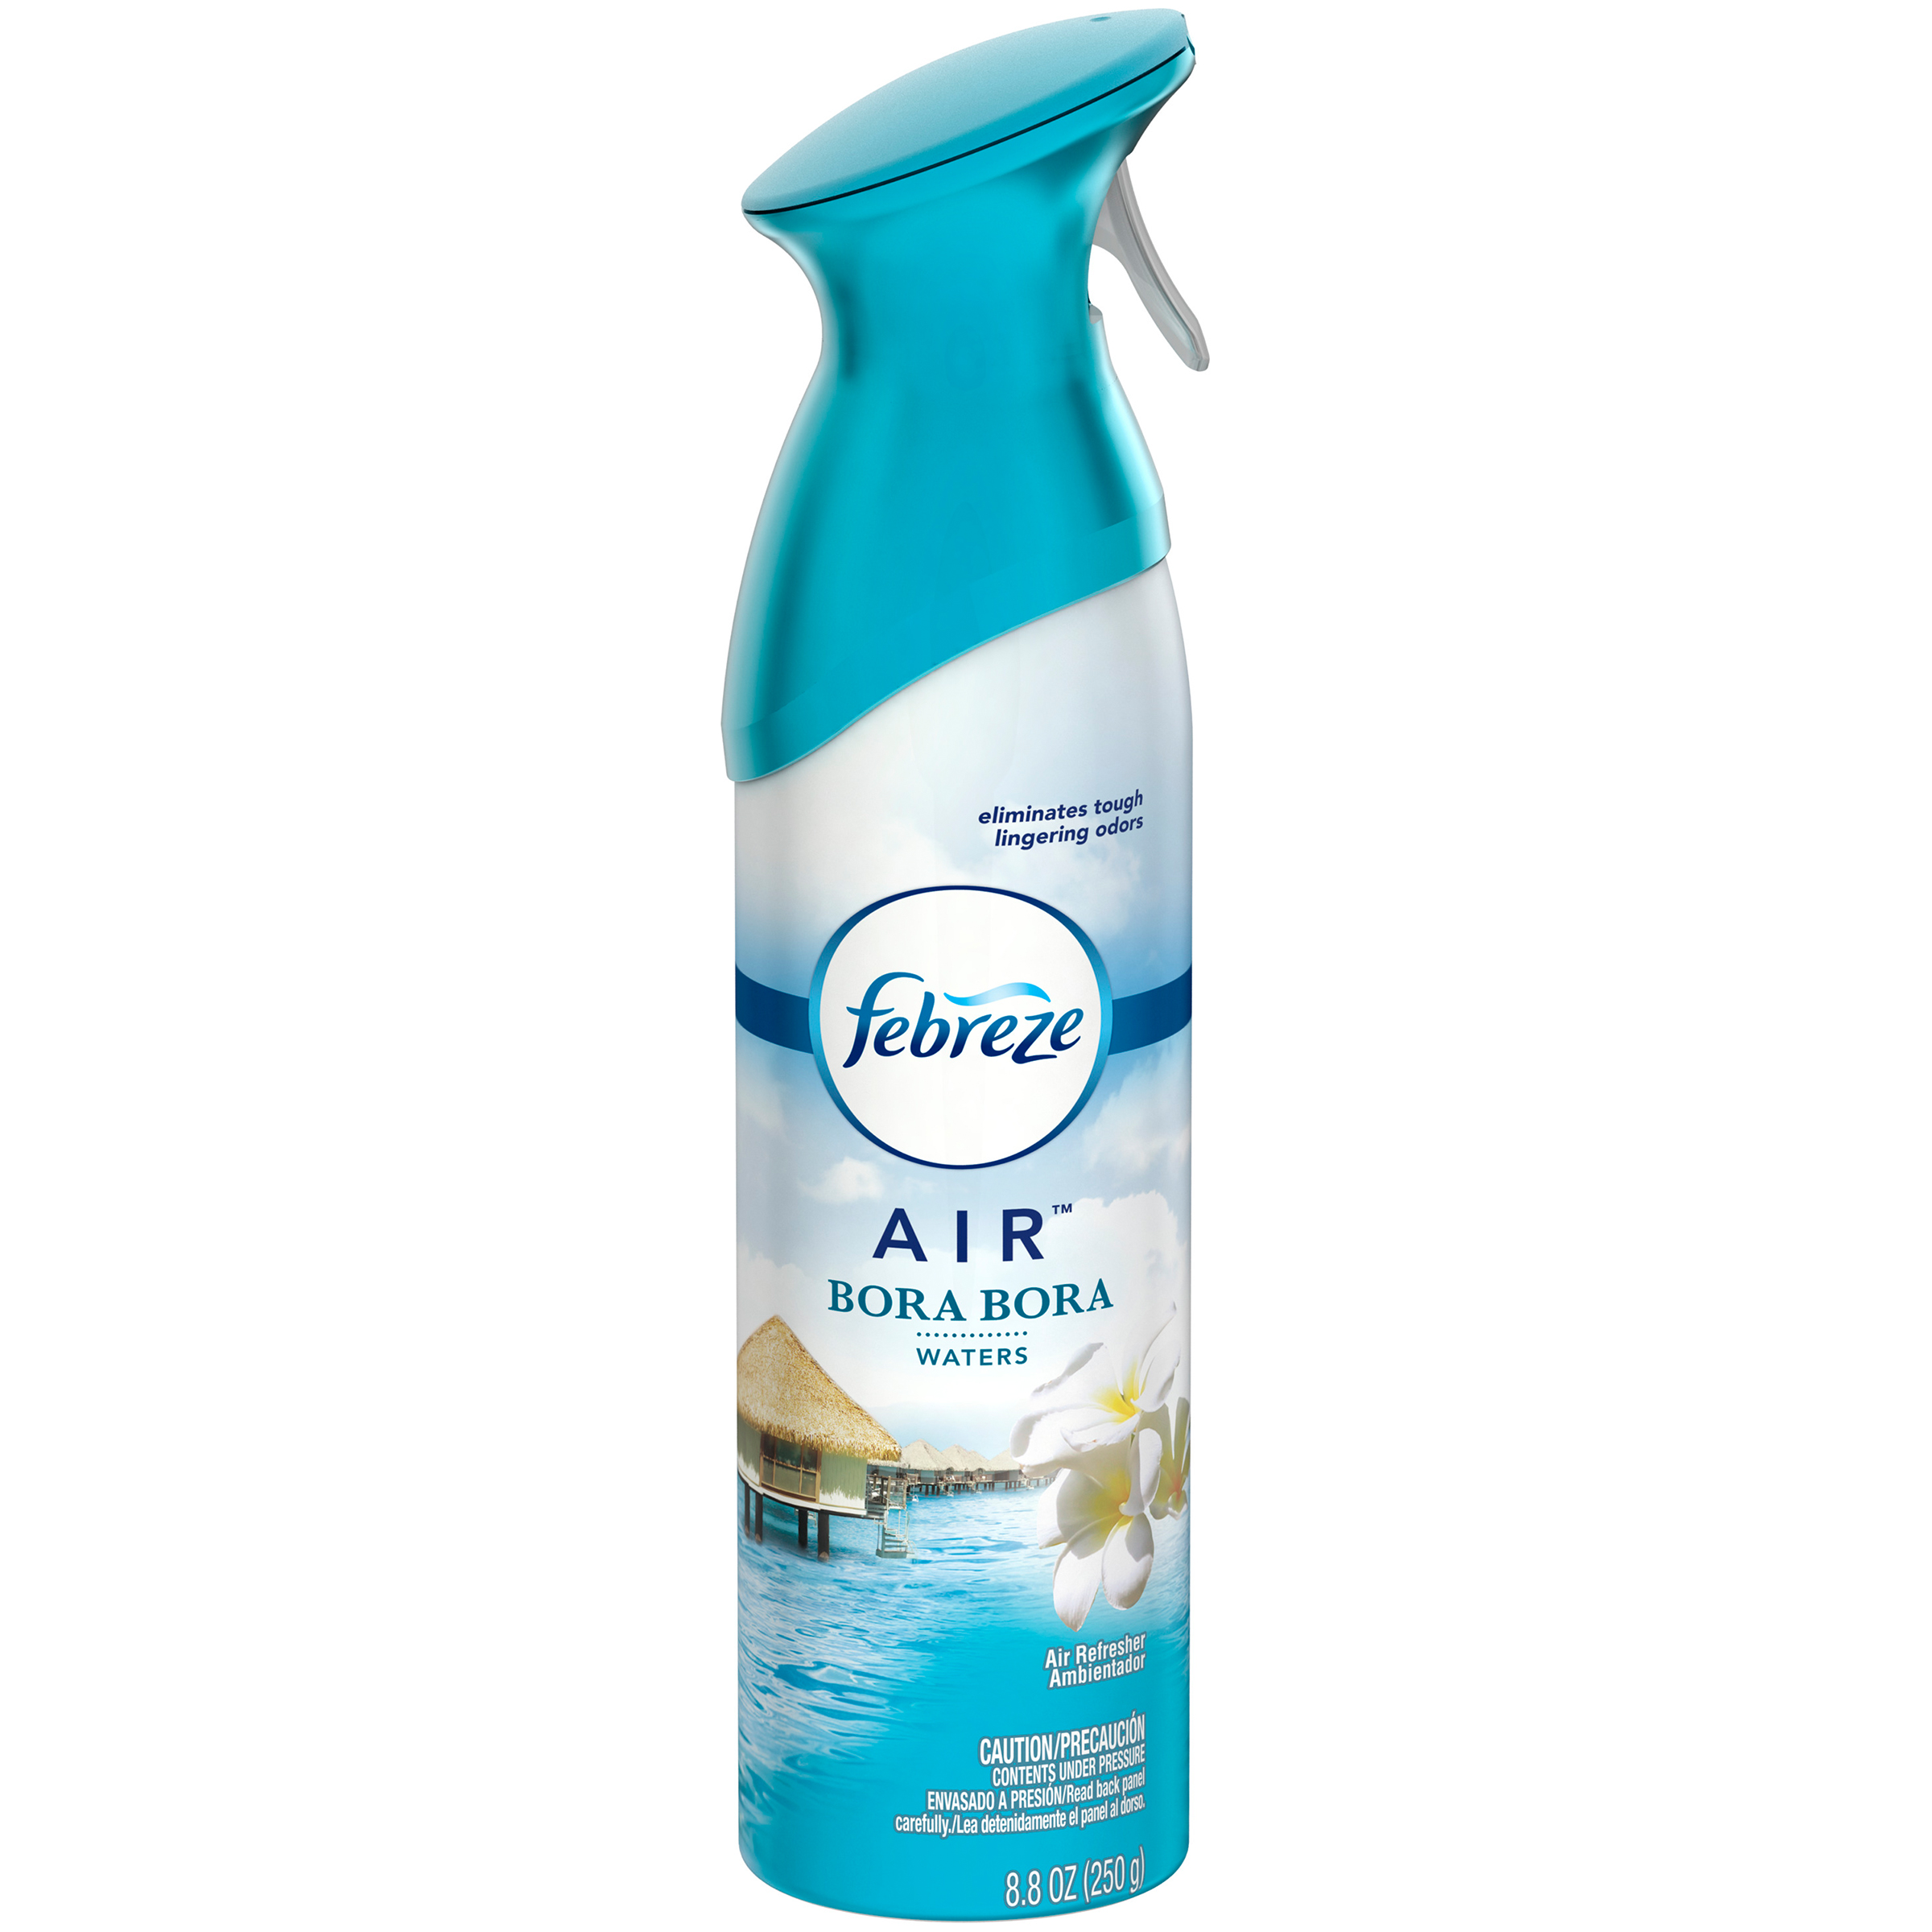 Вода аира. Febreze Air. Febreze освежитель воздуха реклама. Air Freshener. Lenor Febreze.